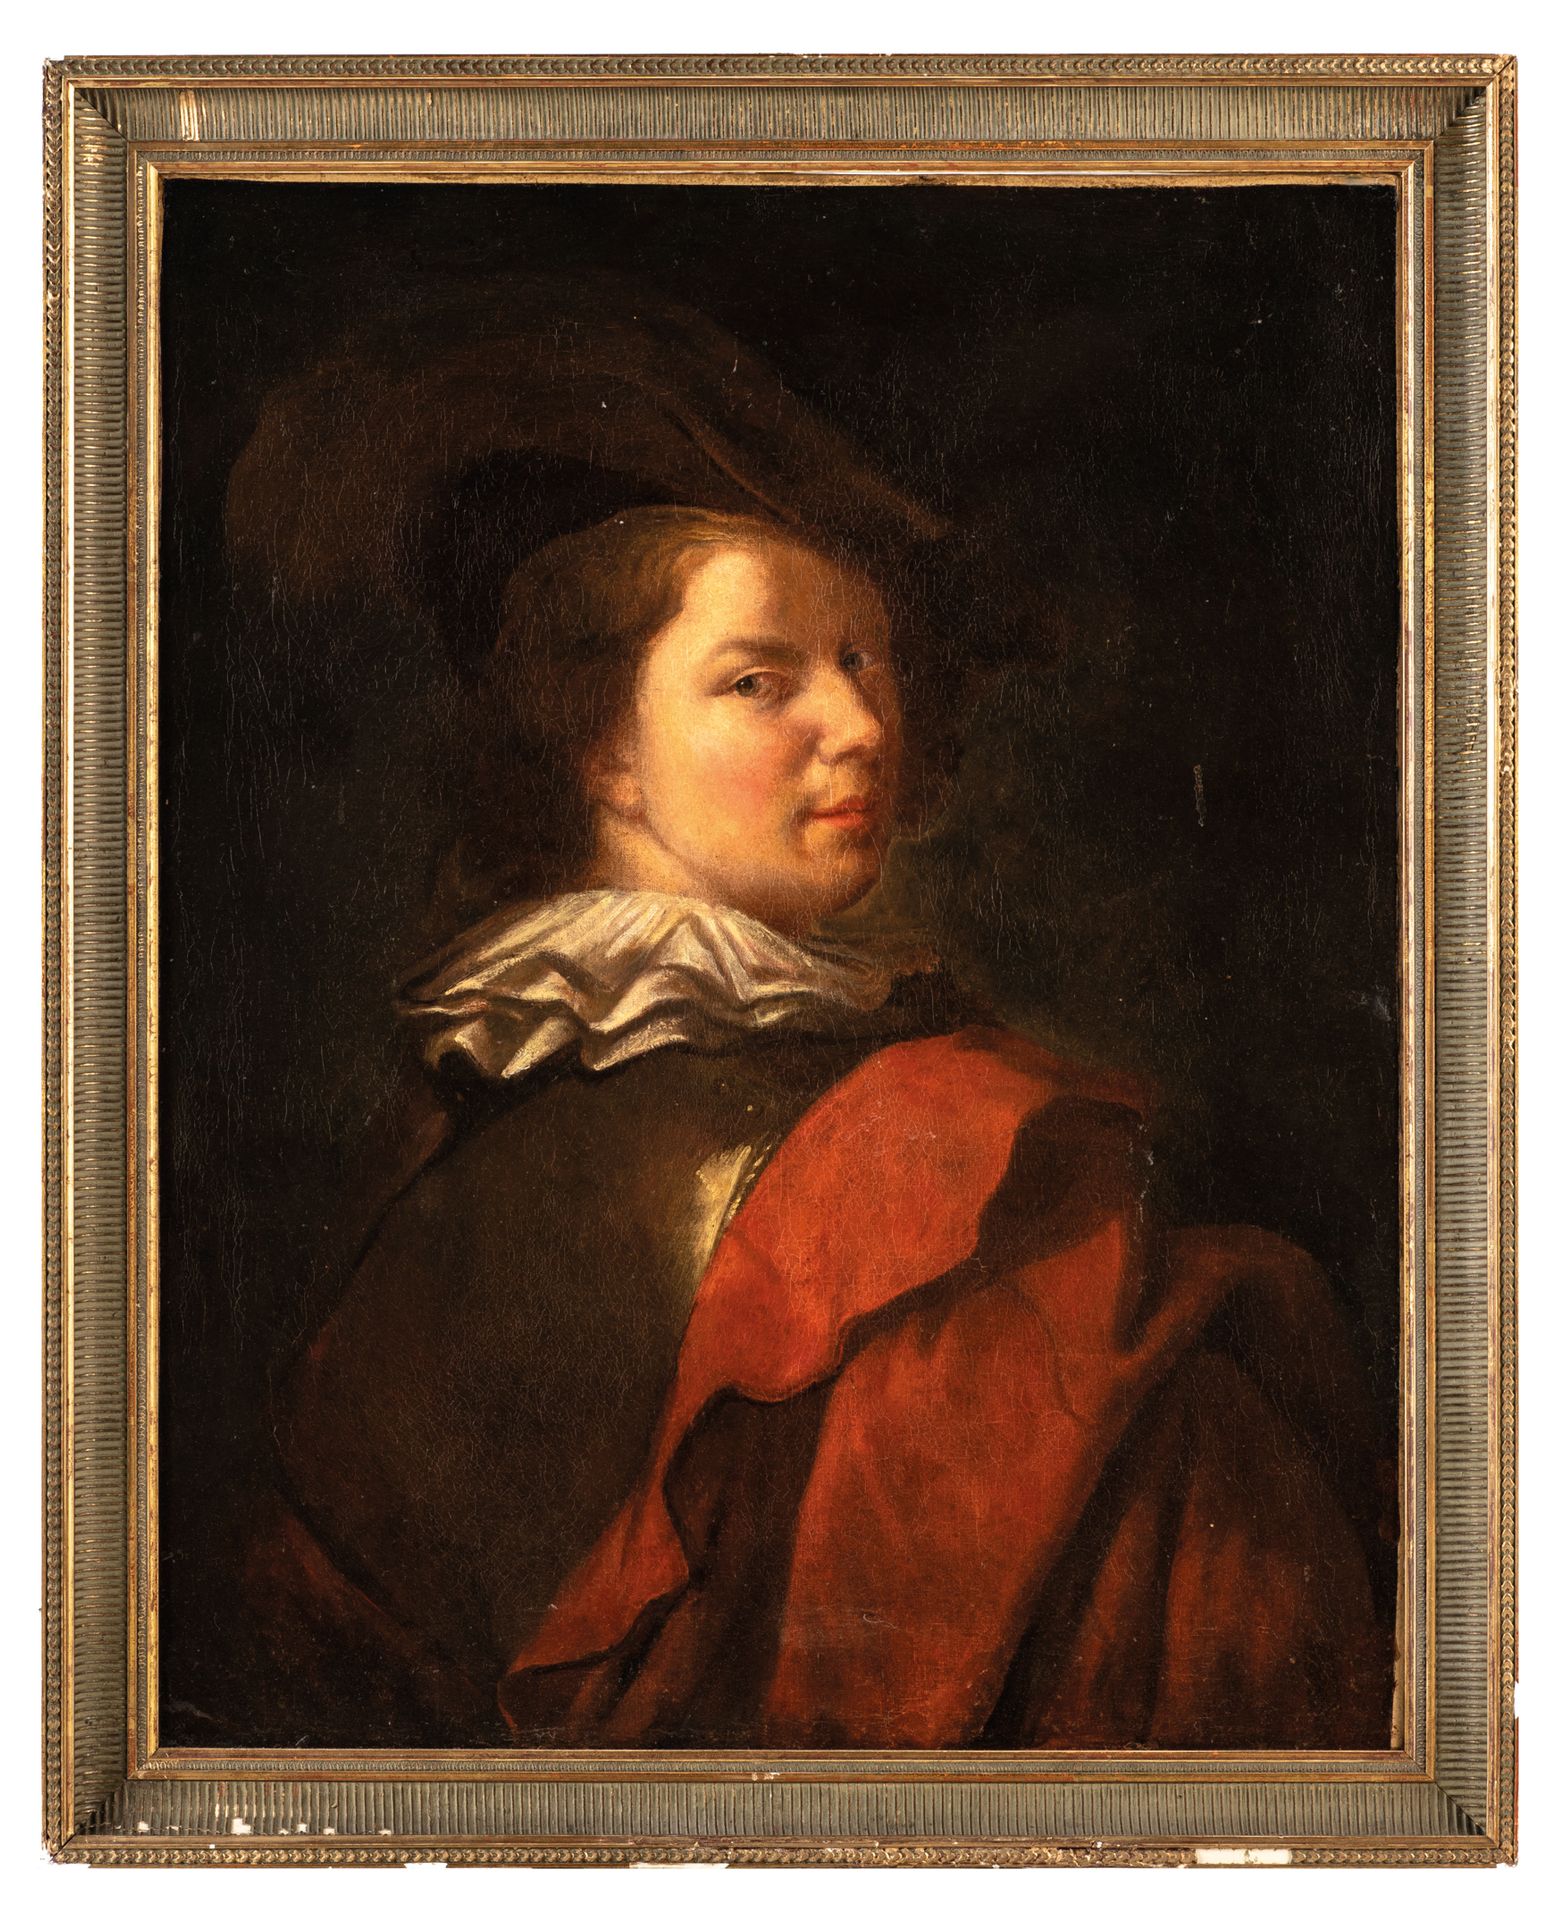 ALEXIS GRIMOU (Argenteuil, 1678 - Paris, 1733)
Porträt eines jungen Mannes mit r&hellip;